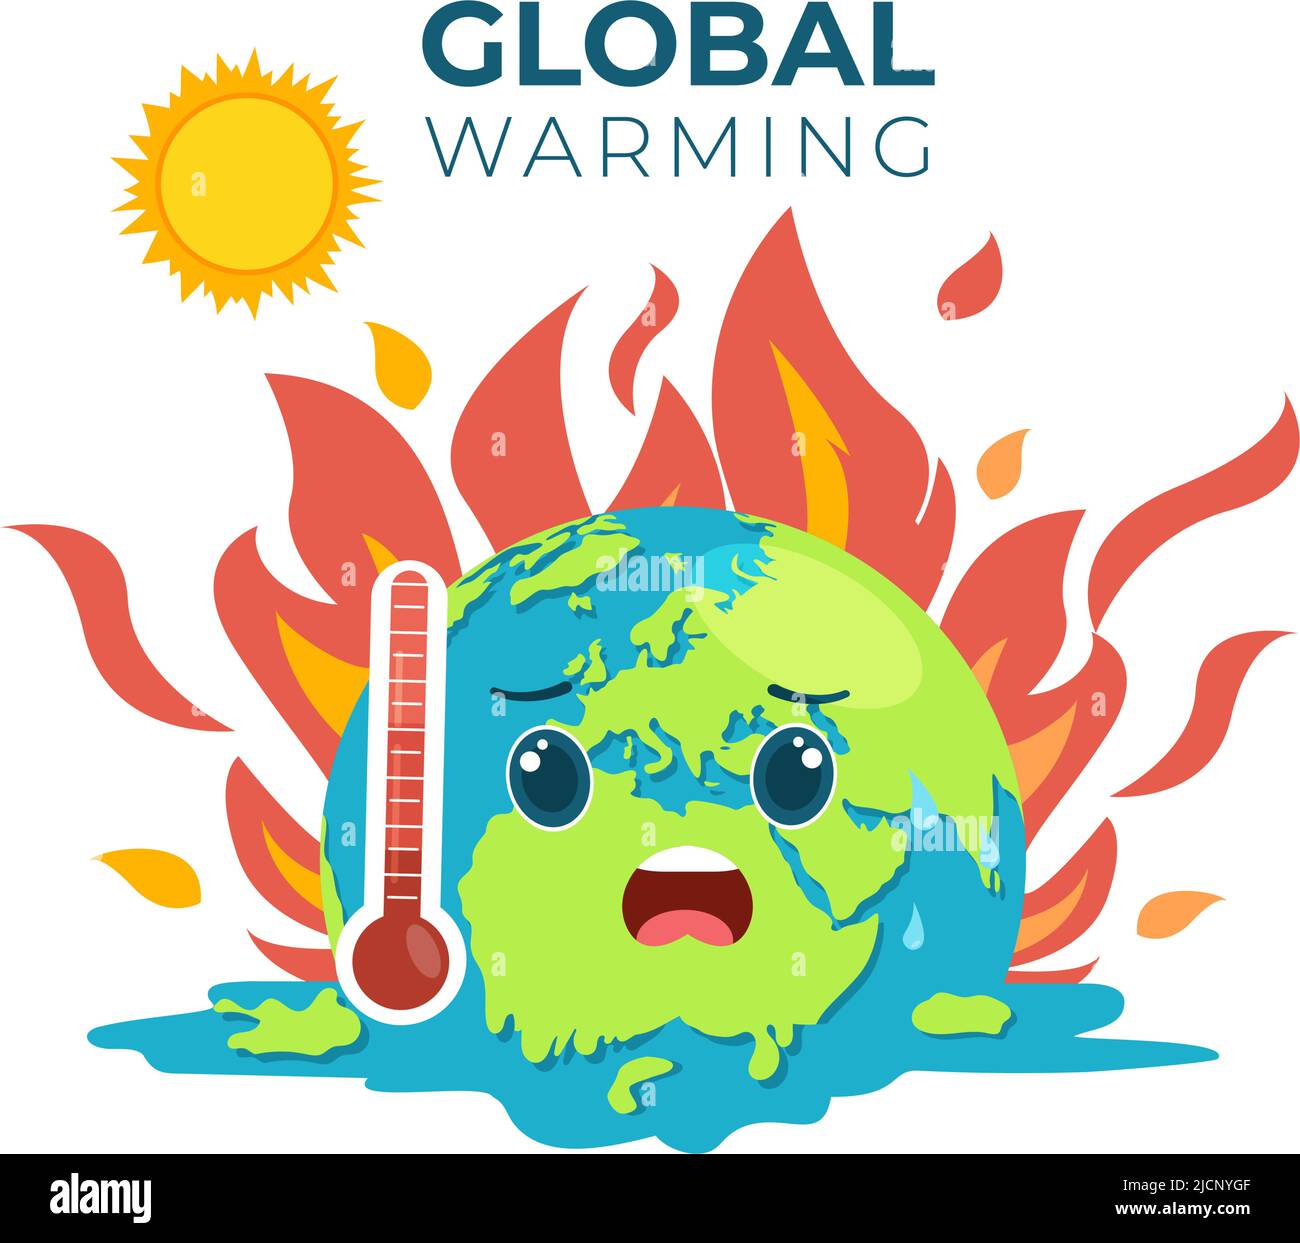 Global warming drawing Vectors & Illustrations for Free Download | Freepik